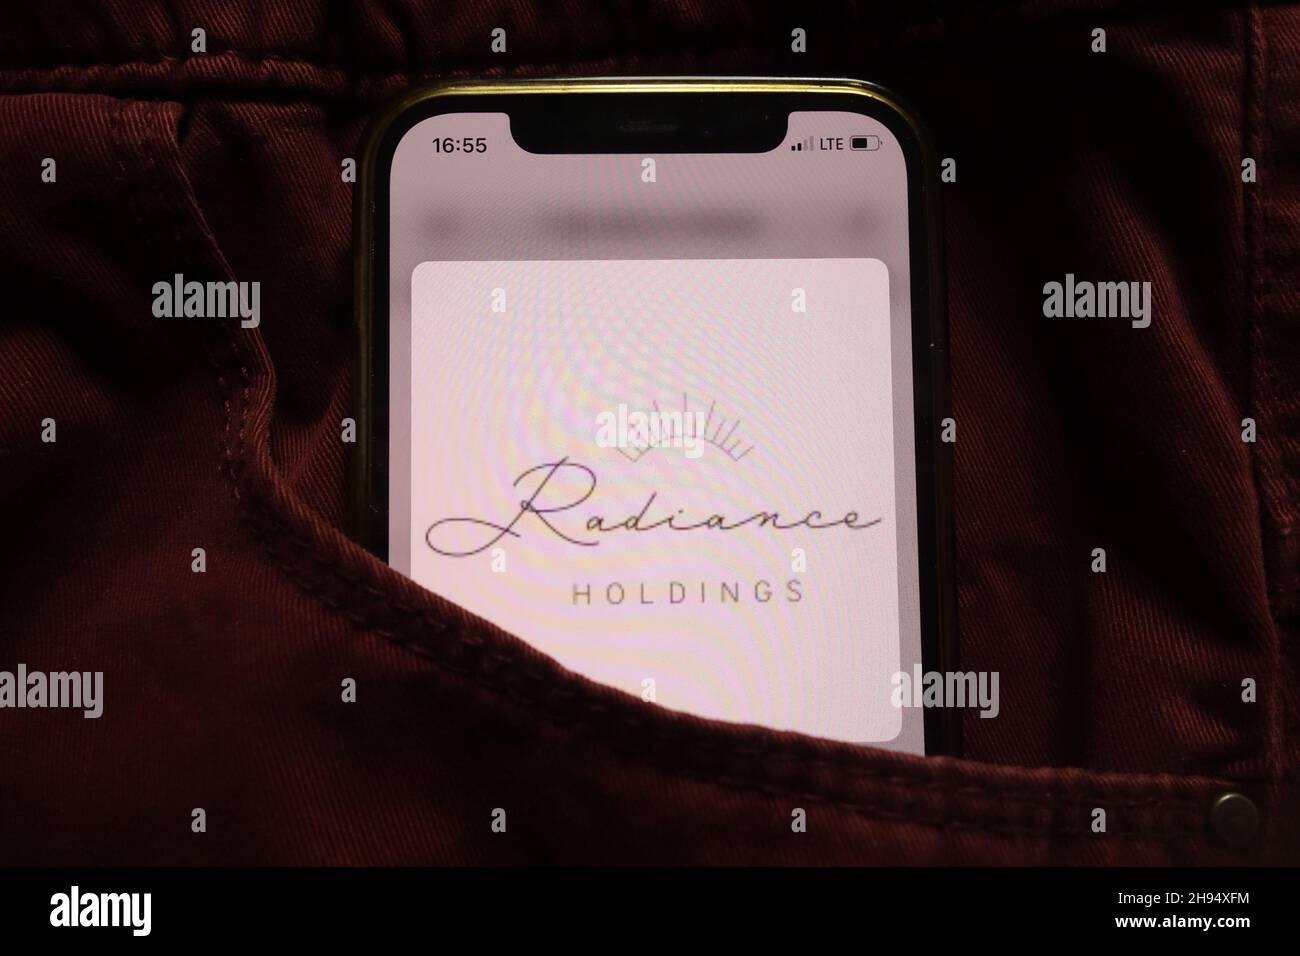 KONSKIE, POLAND - September 15, 2021: Radiance Holdings logo displayed on mobile phone hidden in jeans pocket Stock Photo